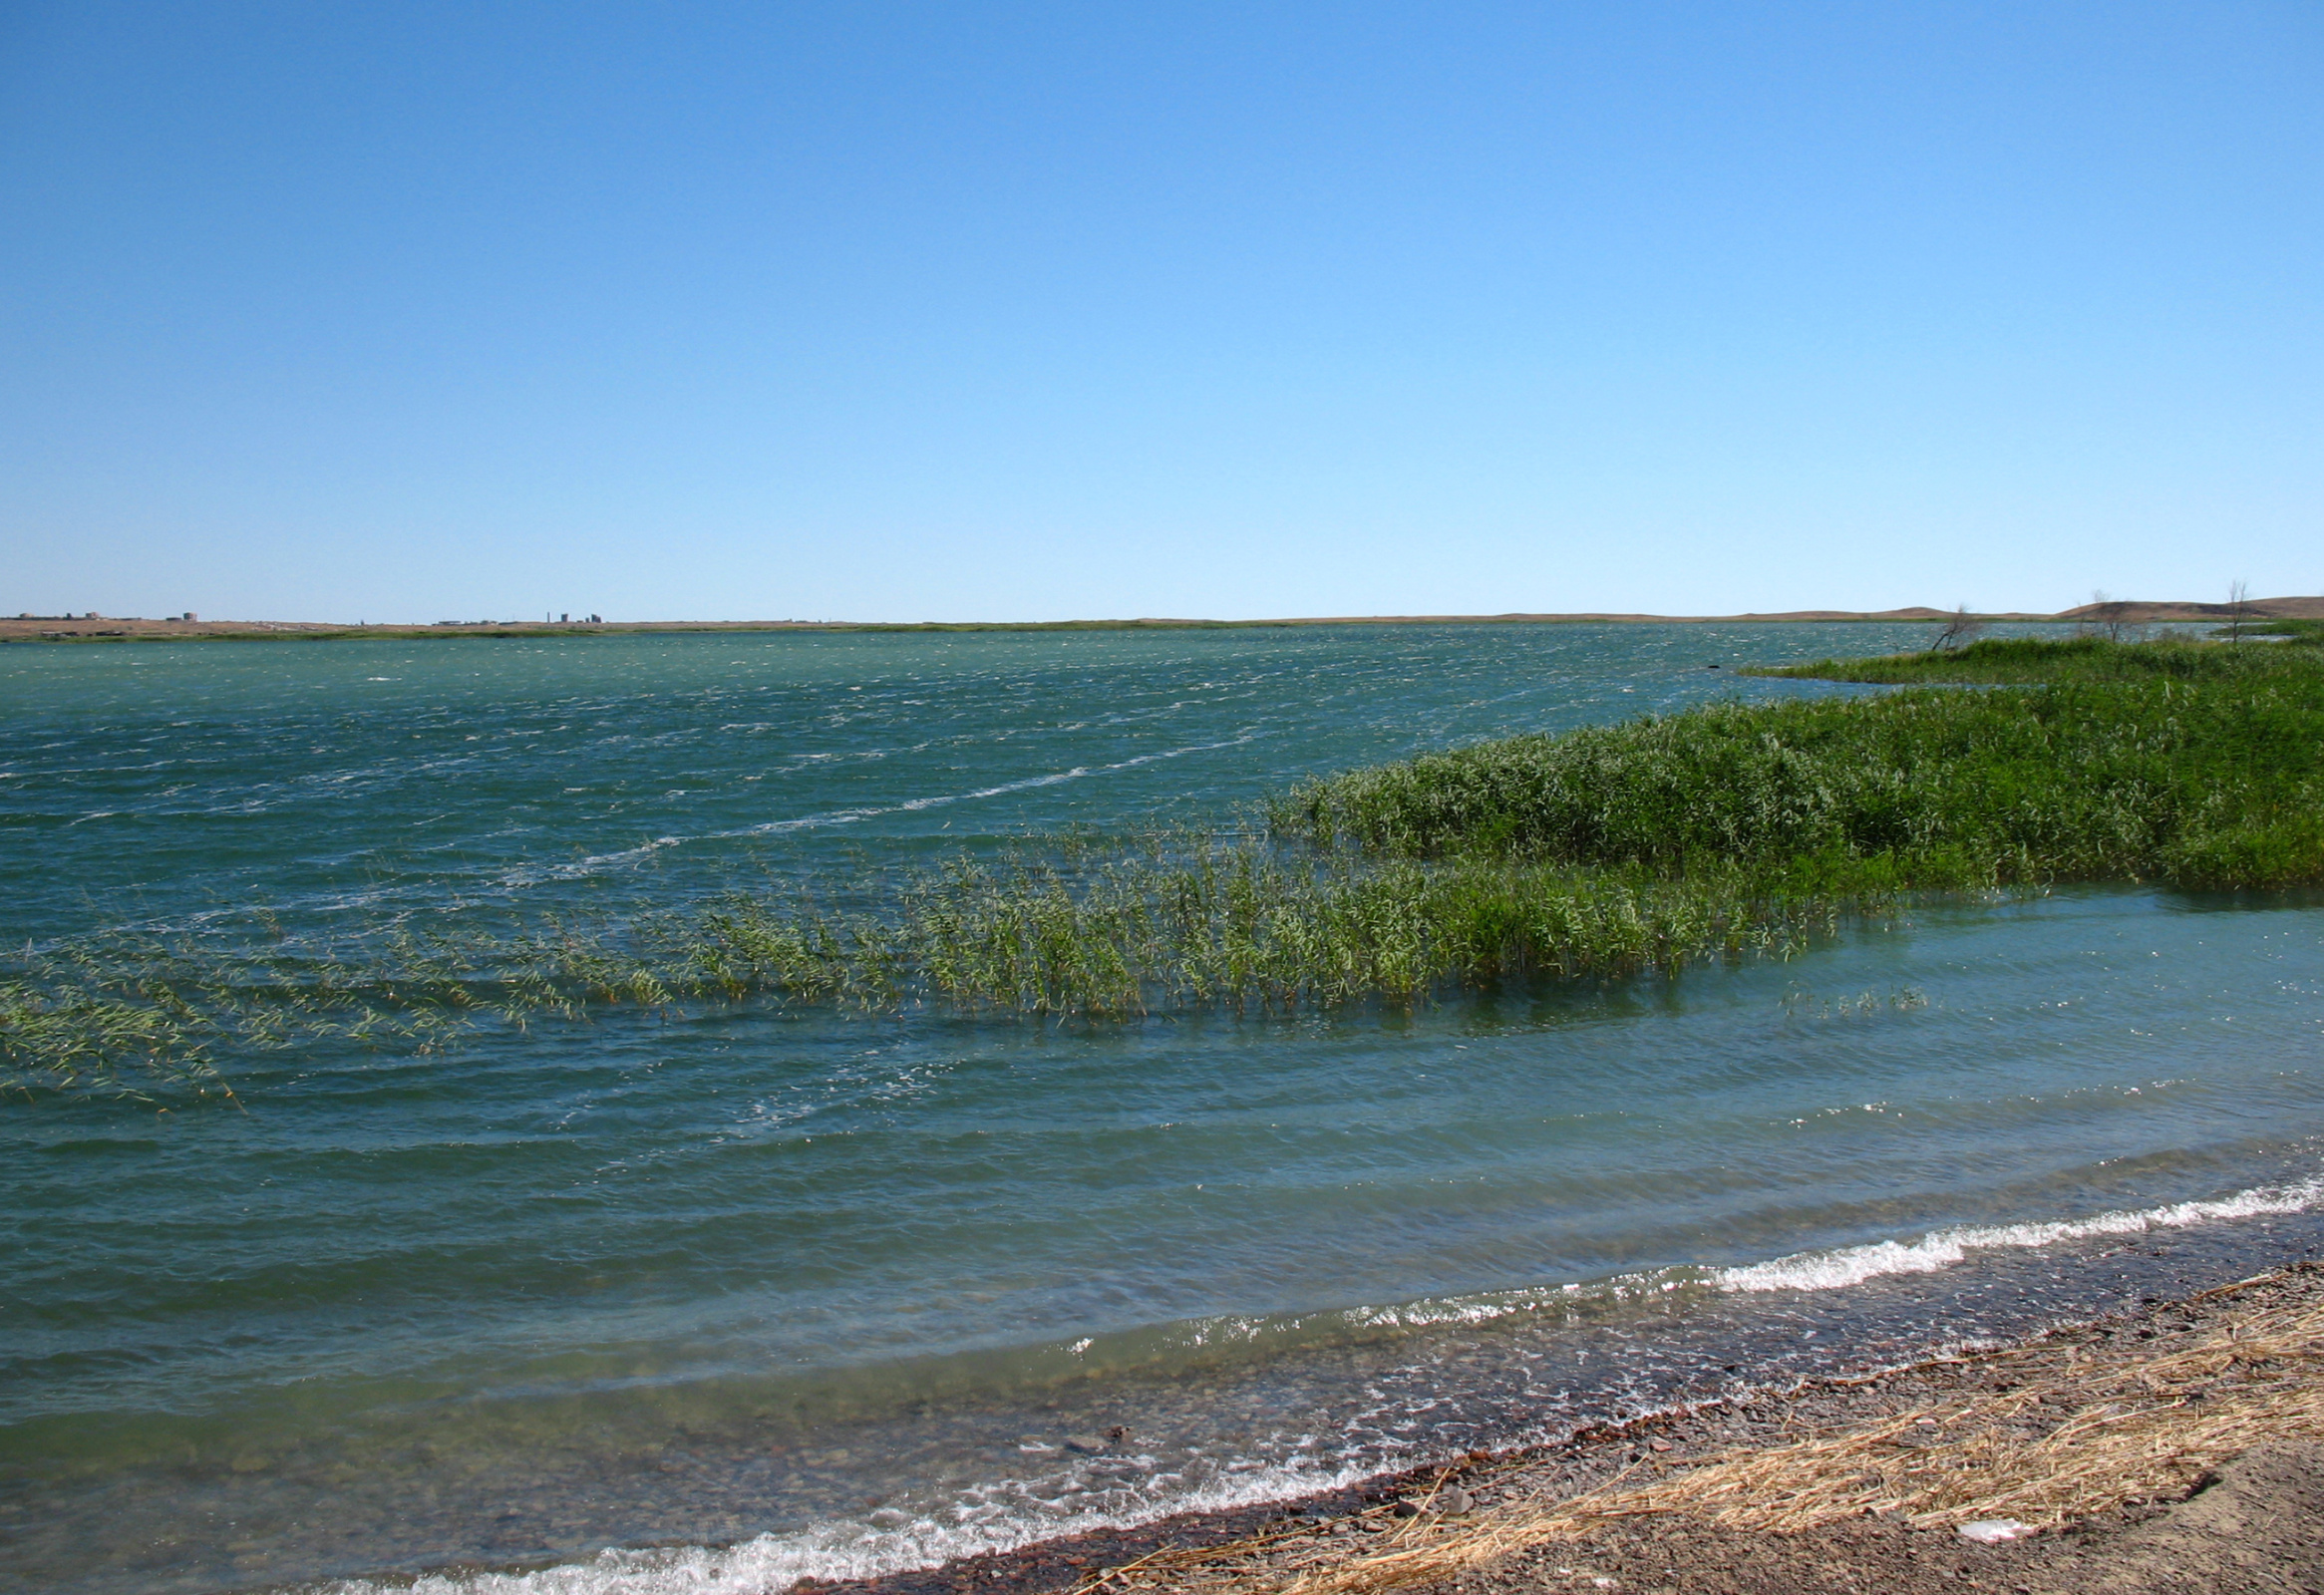 Озеро Балхаш заставило учёного задуматься над природой колебаний воды. Фото: wikipedia.org / Nikolay Yushnikov